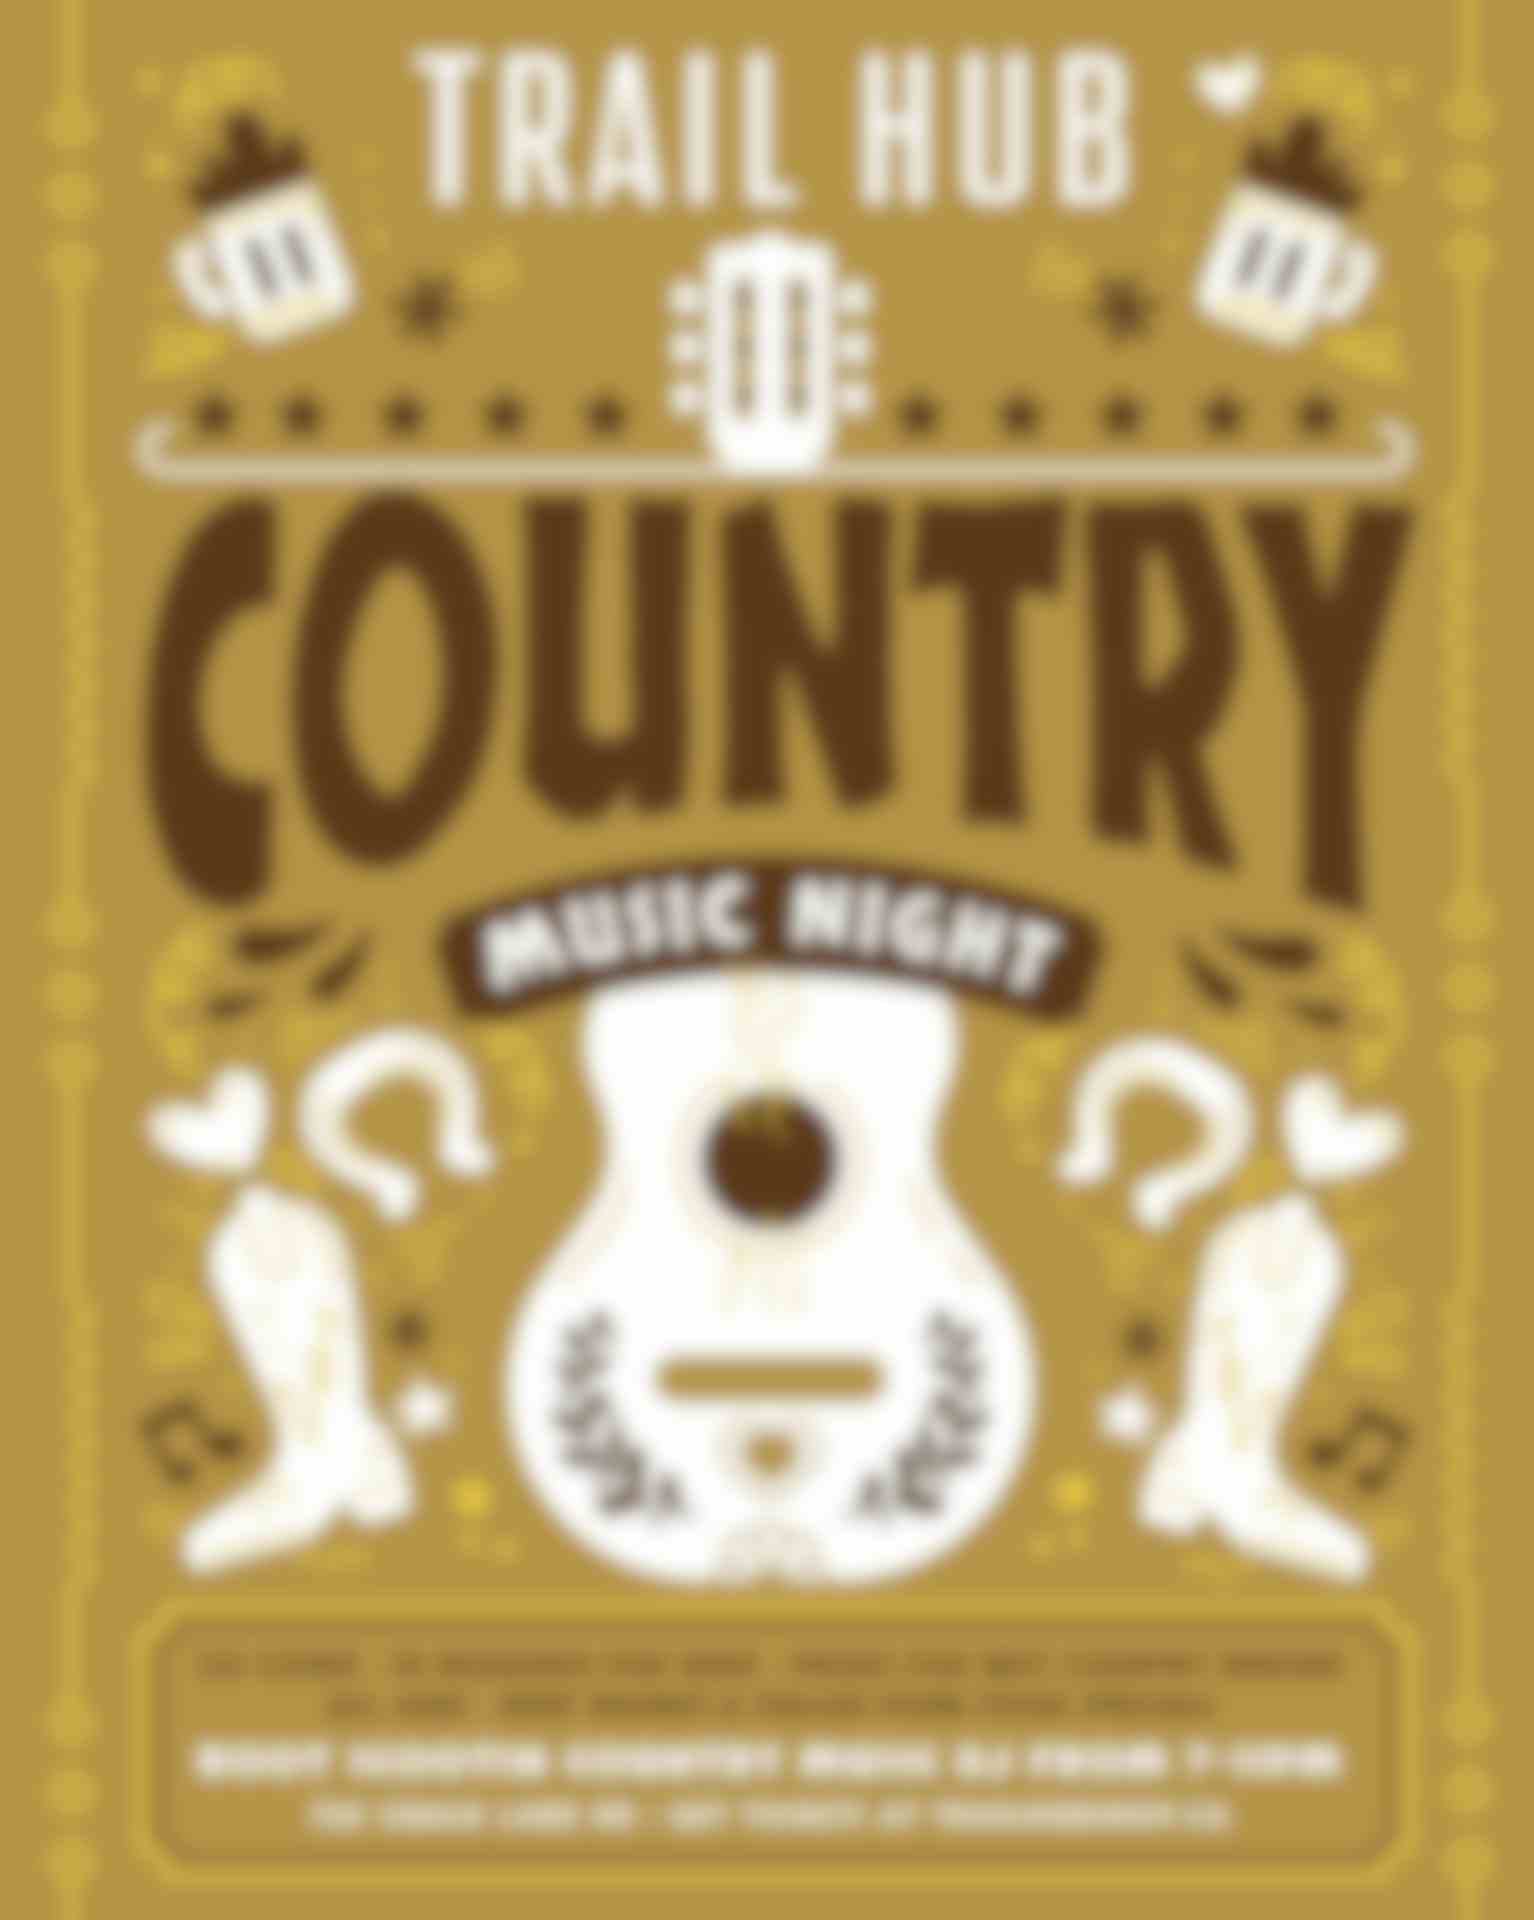 Country Music Night at Trail Hub